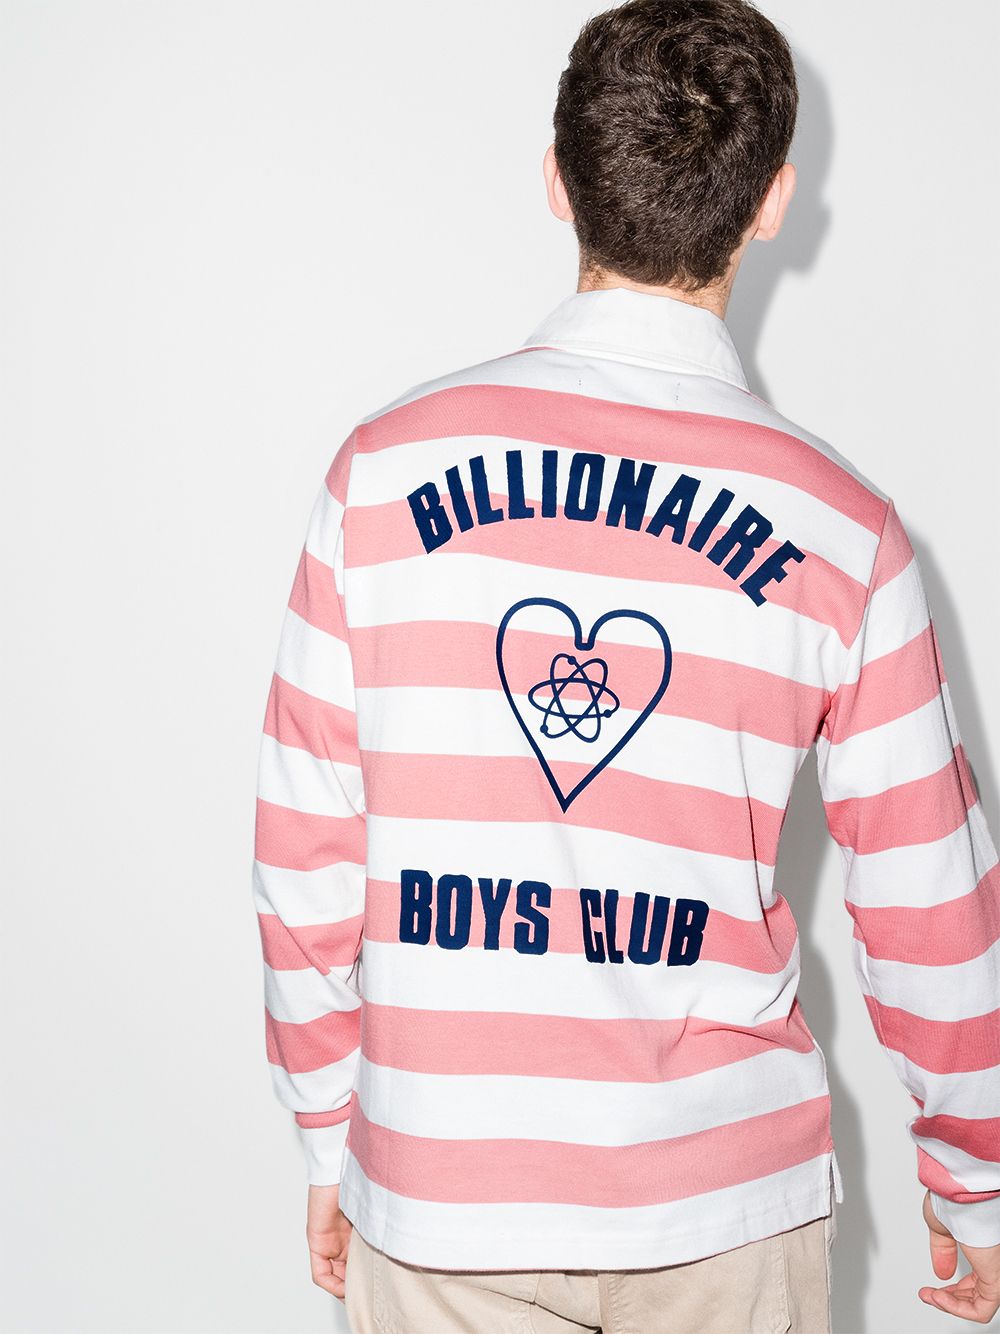 фото Billionaire boys club рубашка поло в полоску